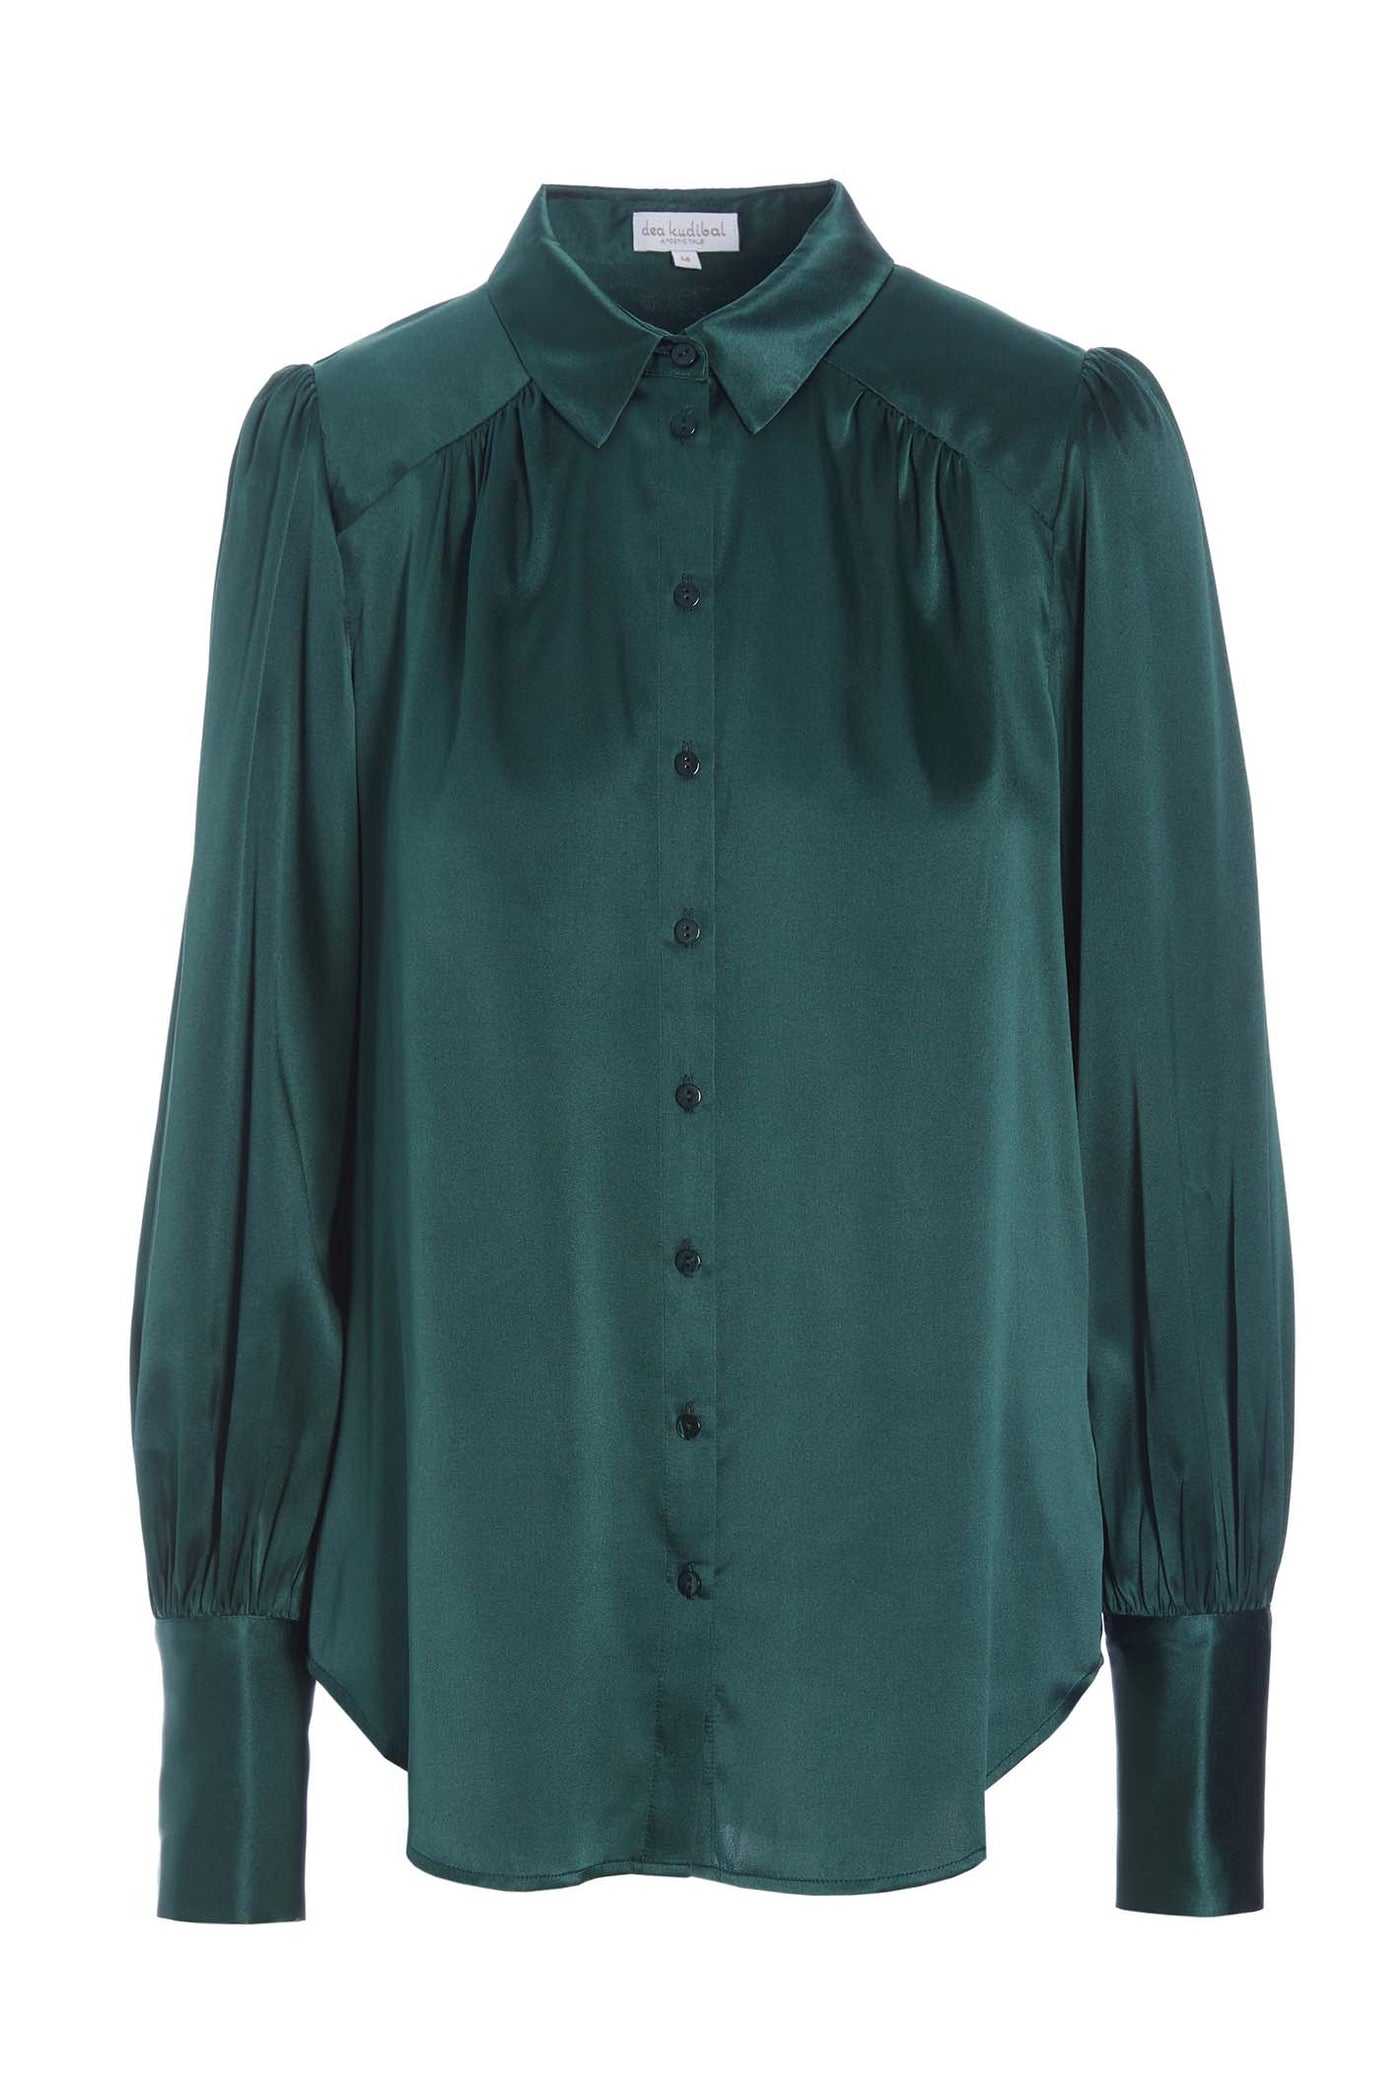 Dea Kudibal Cadence Shirt Matcha Green - Lonah Boutique